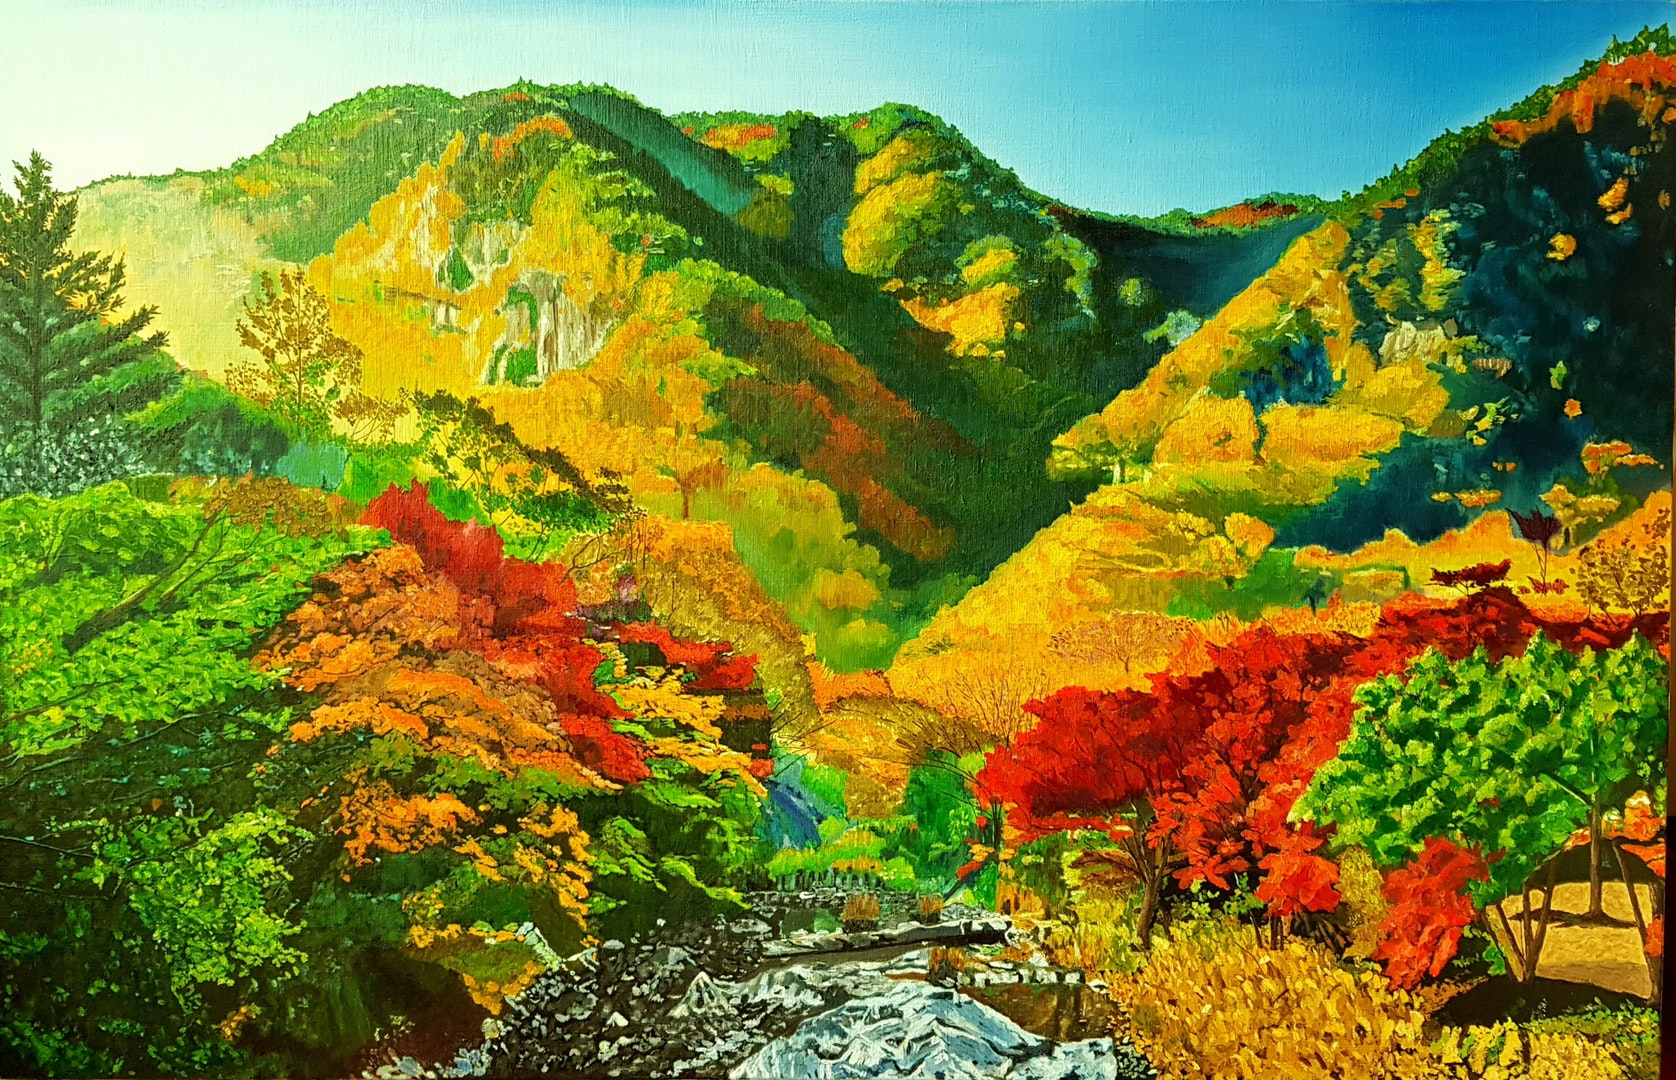 'Autumn in korea', Seung Jin Kim, Oil on linen, 100 x 65 cm